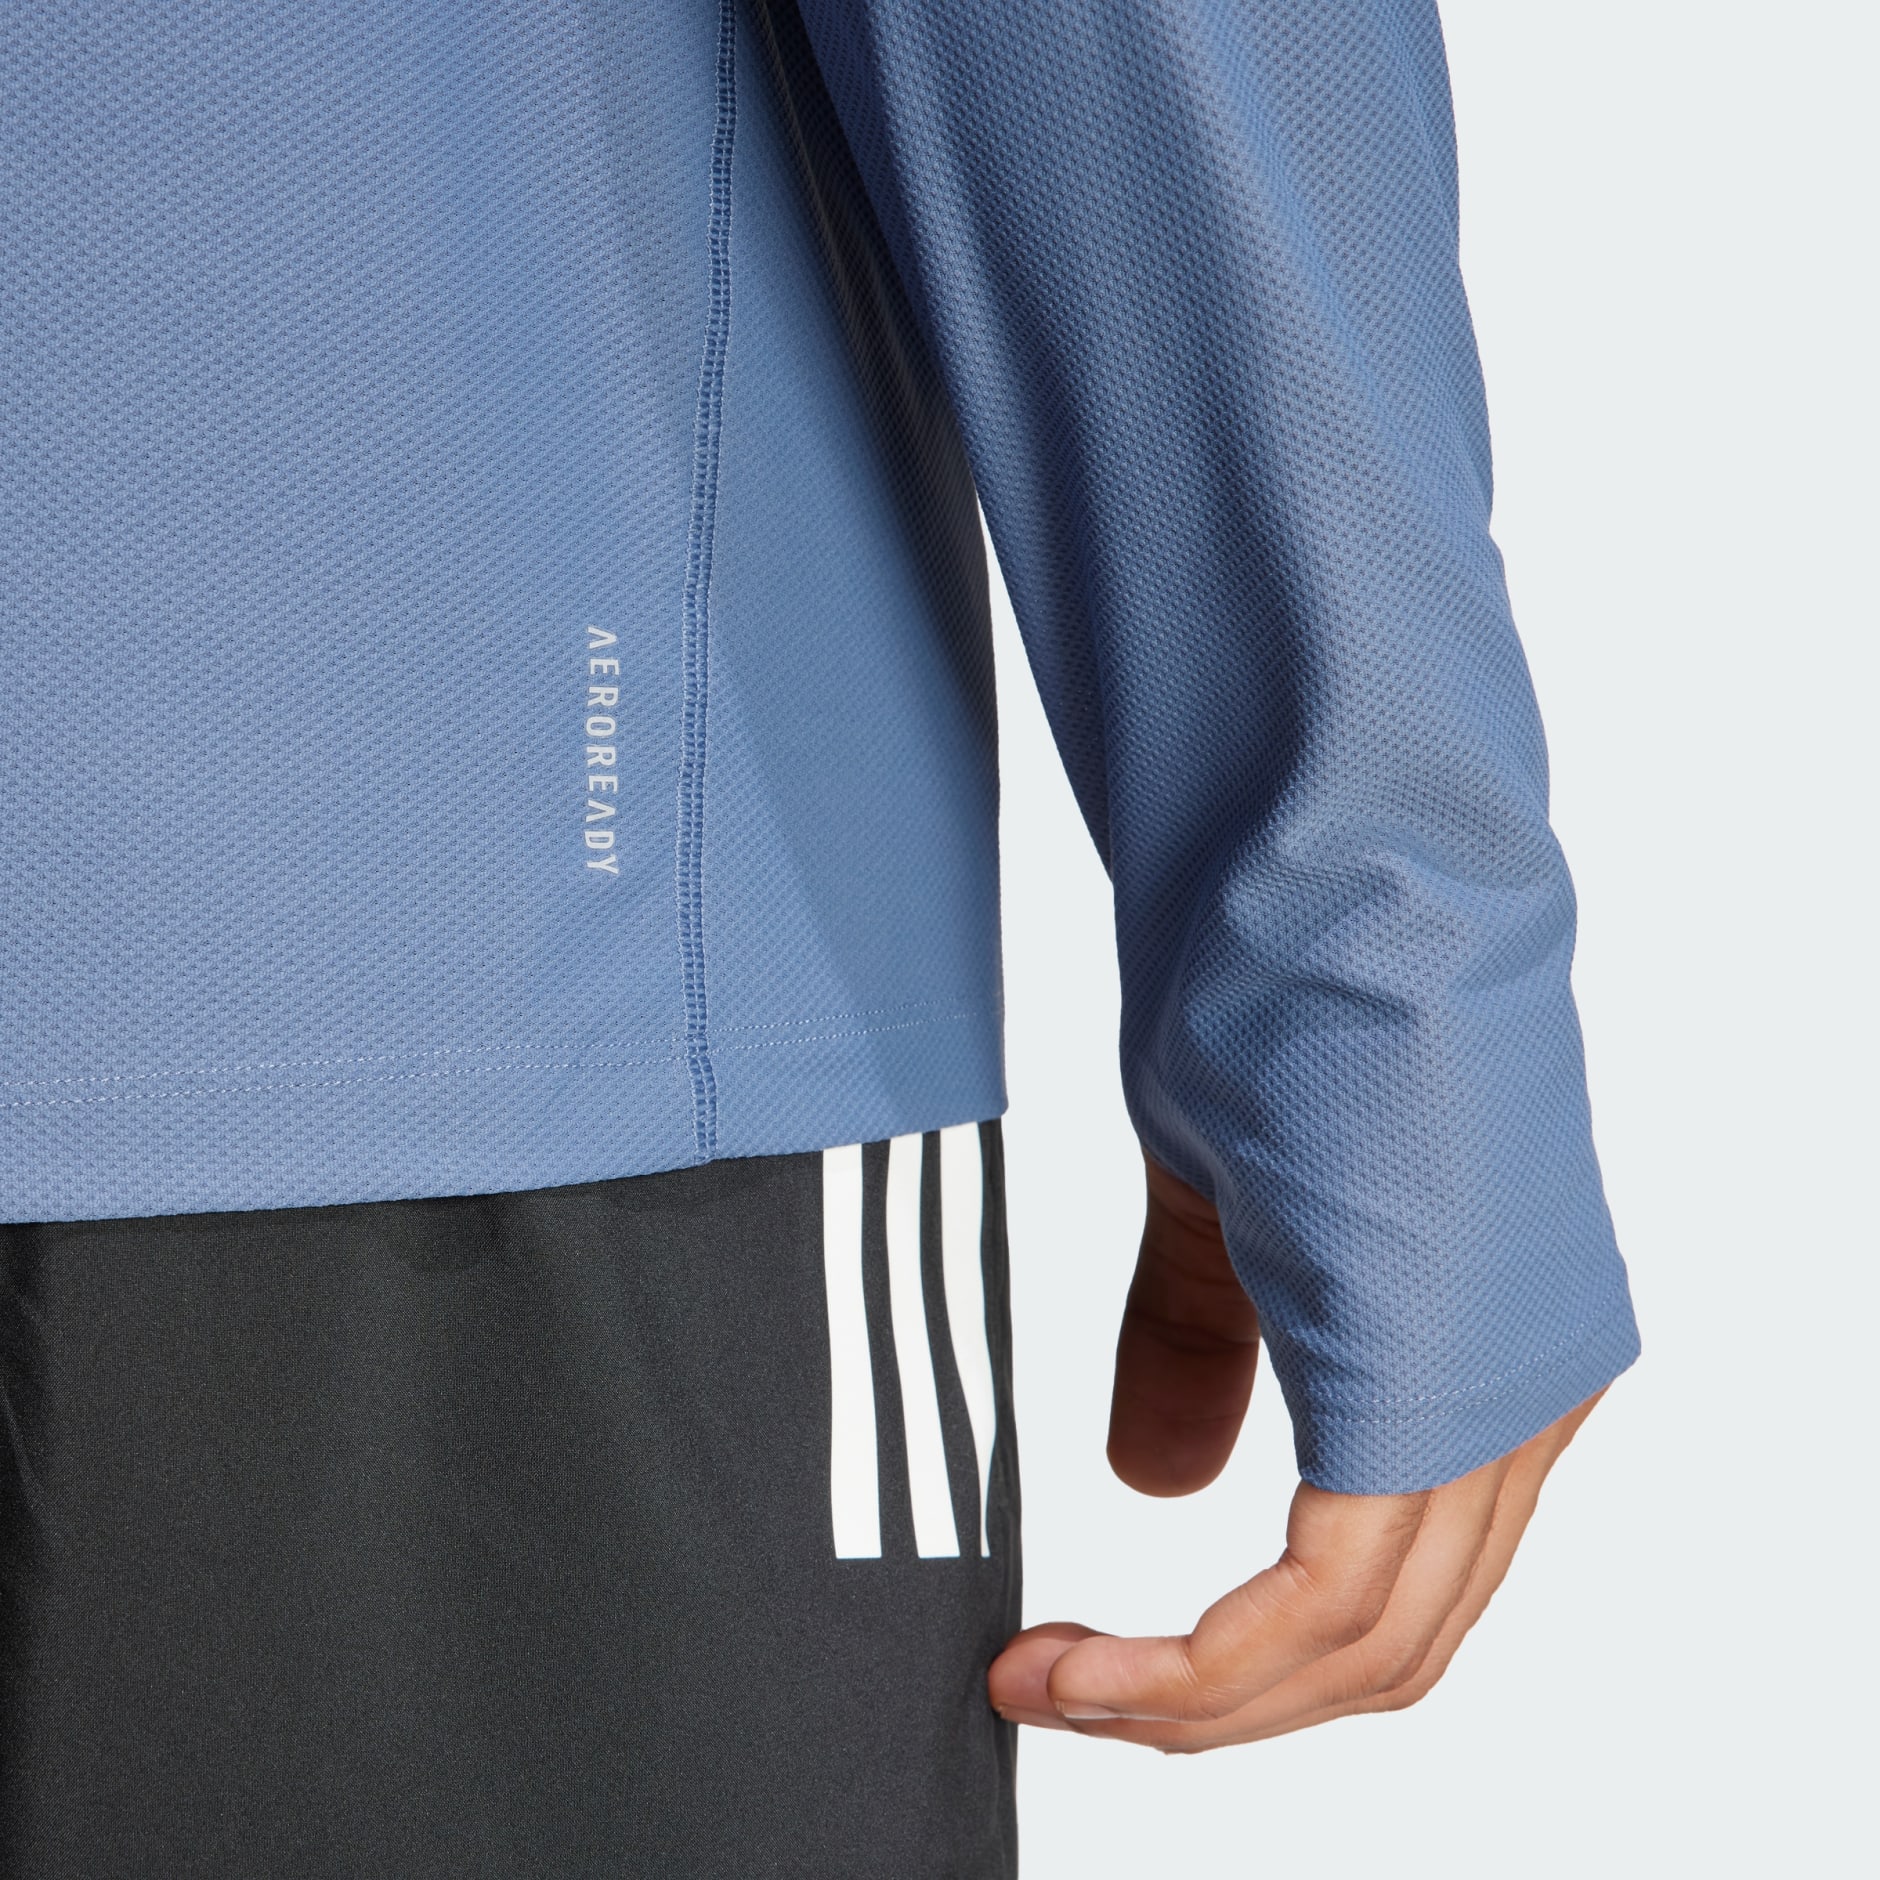 Men's Clothing - Own The Run Long Sleeve Tee - Blue | adidas Saudi